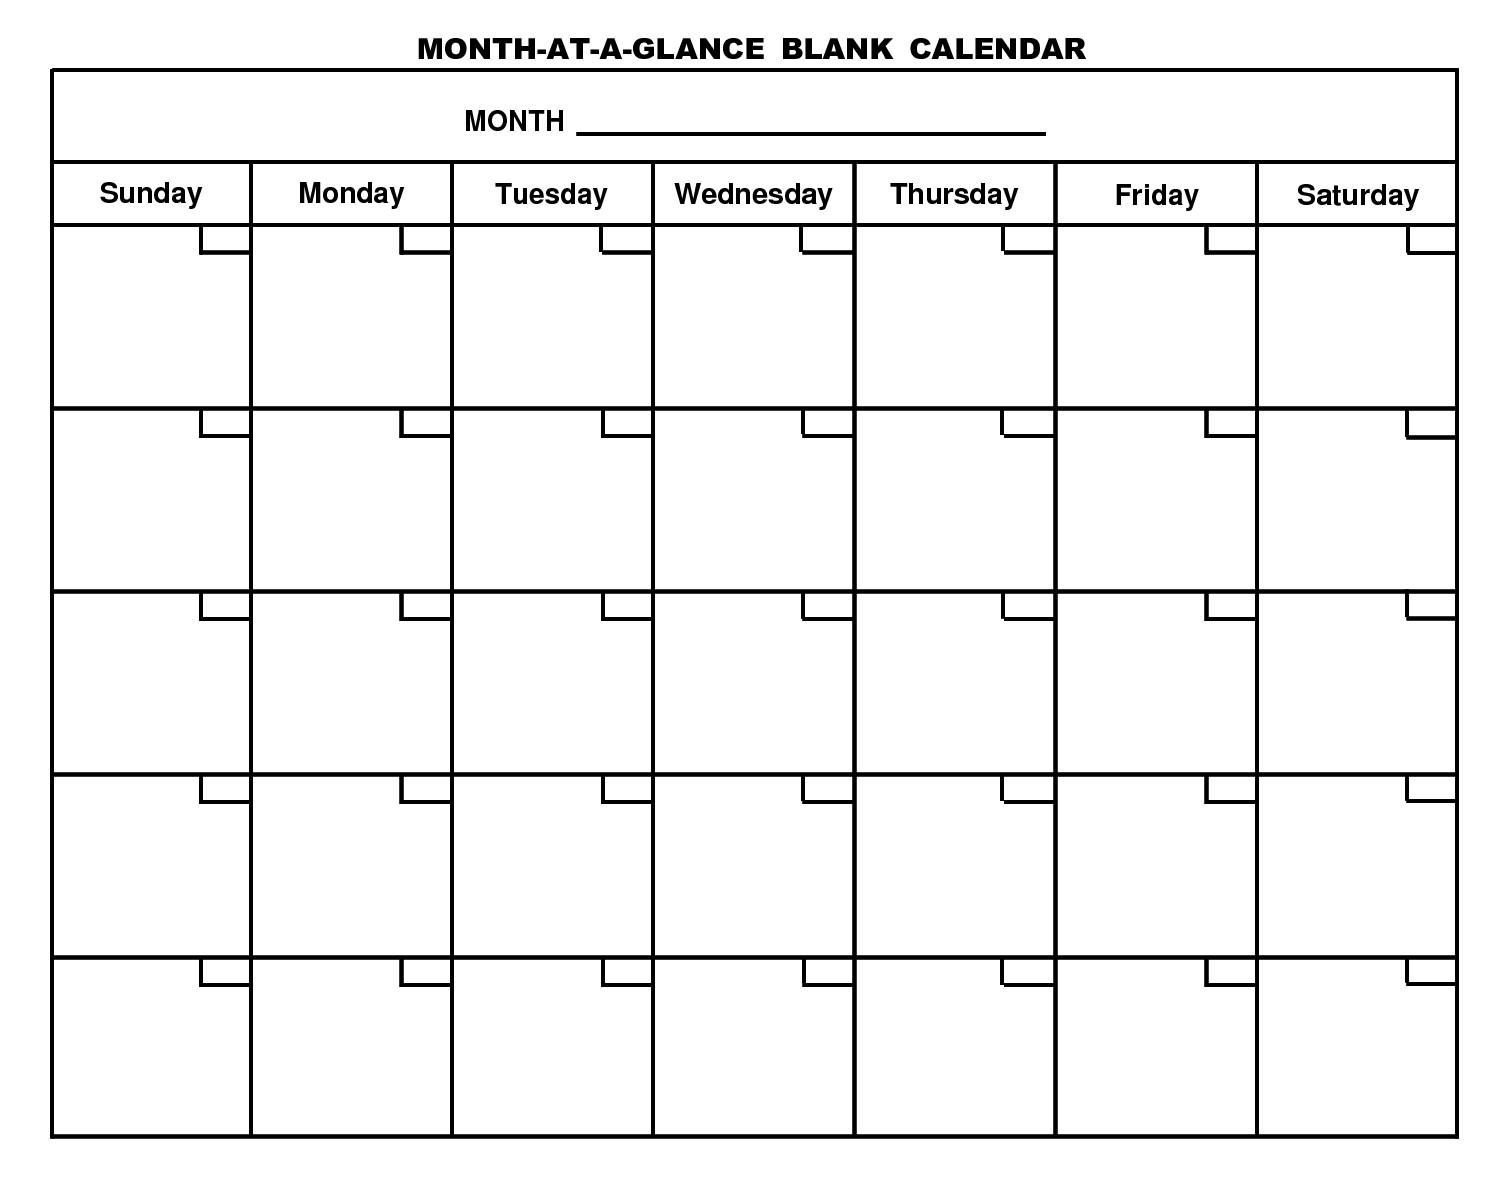 Pinstacy Tangren On Work  Printable Blank Calendar Blank in Month At A Glance Blank Calendar Template